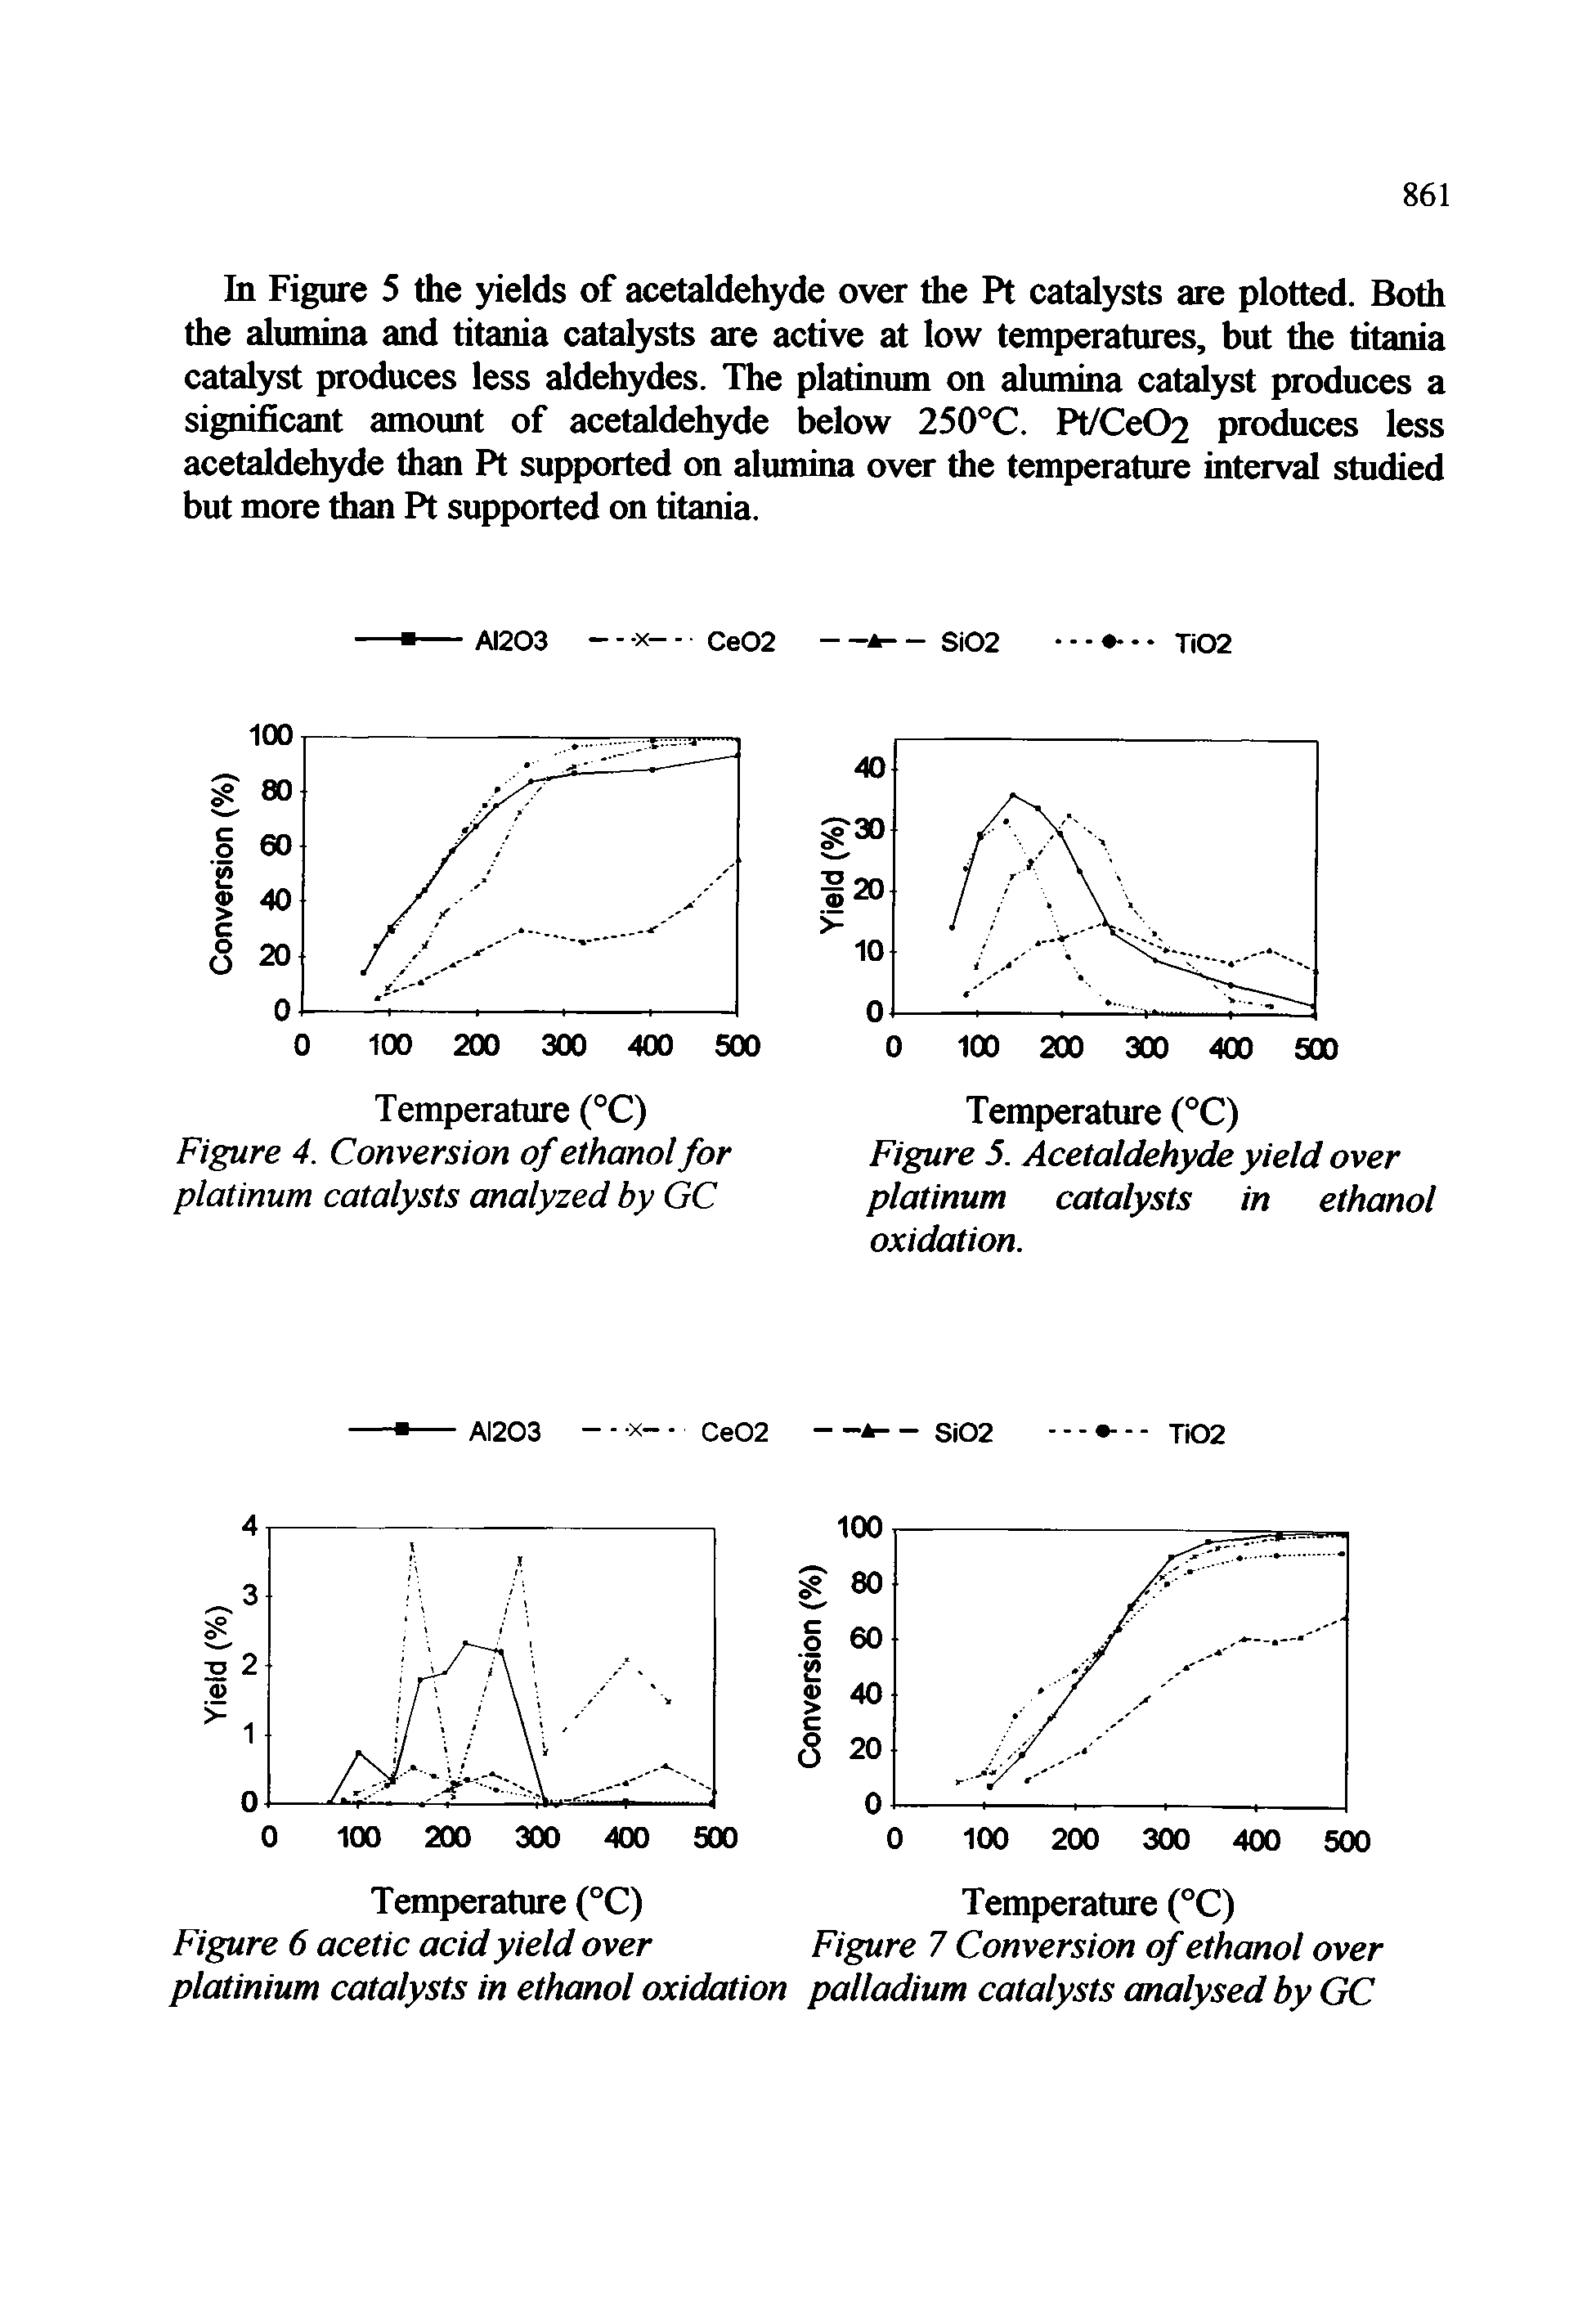 Figure 5. Acetaldehyde yield over platinum catalysts in ethanol oxidation.